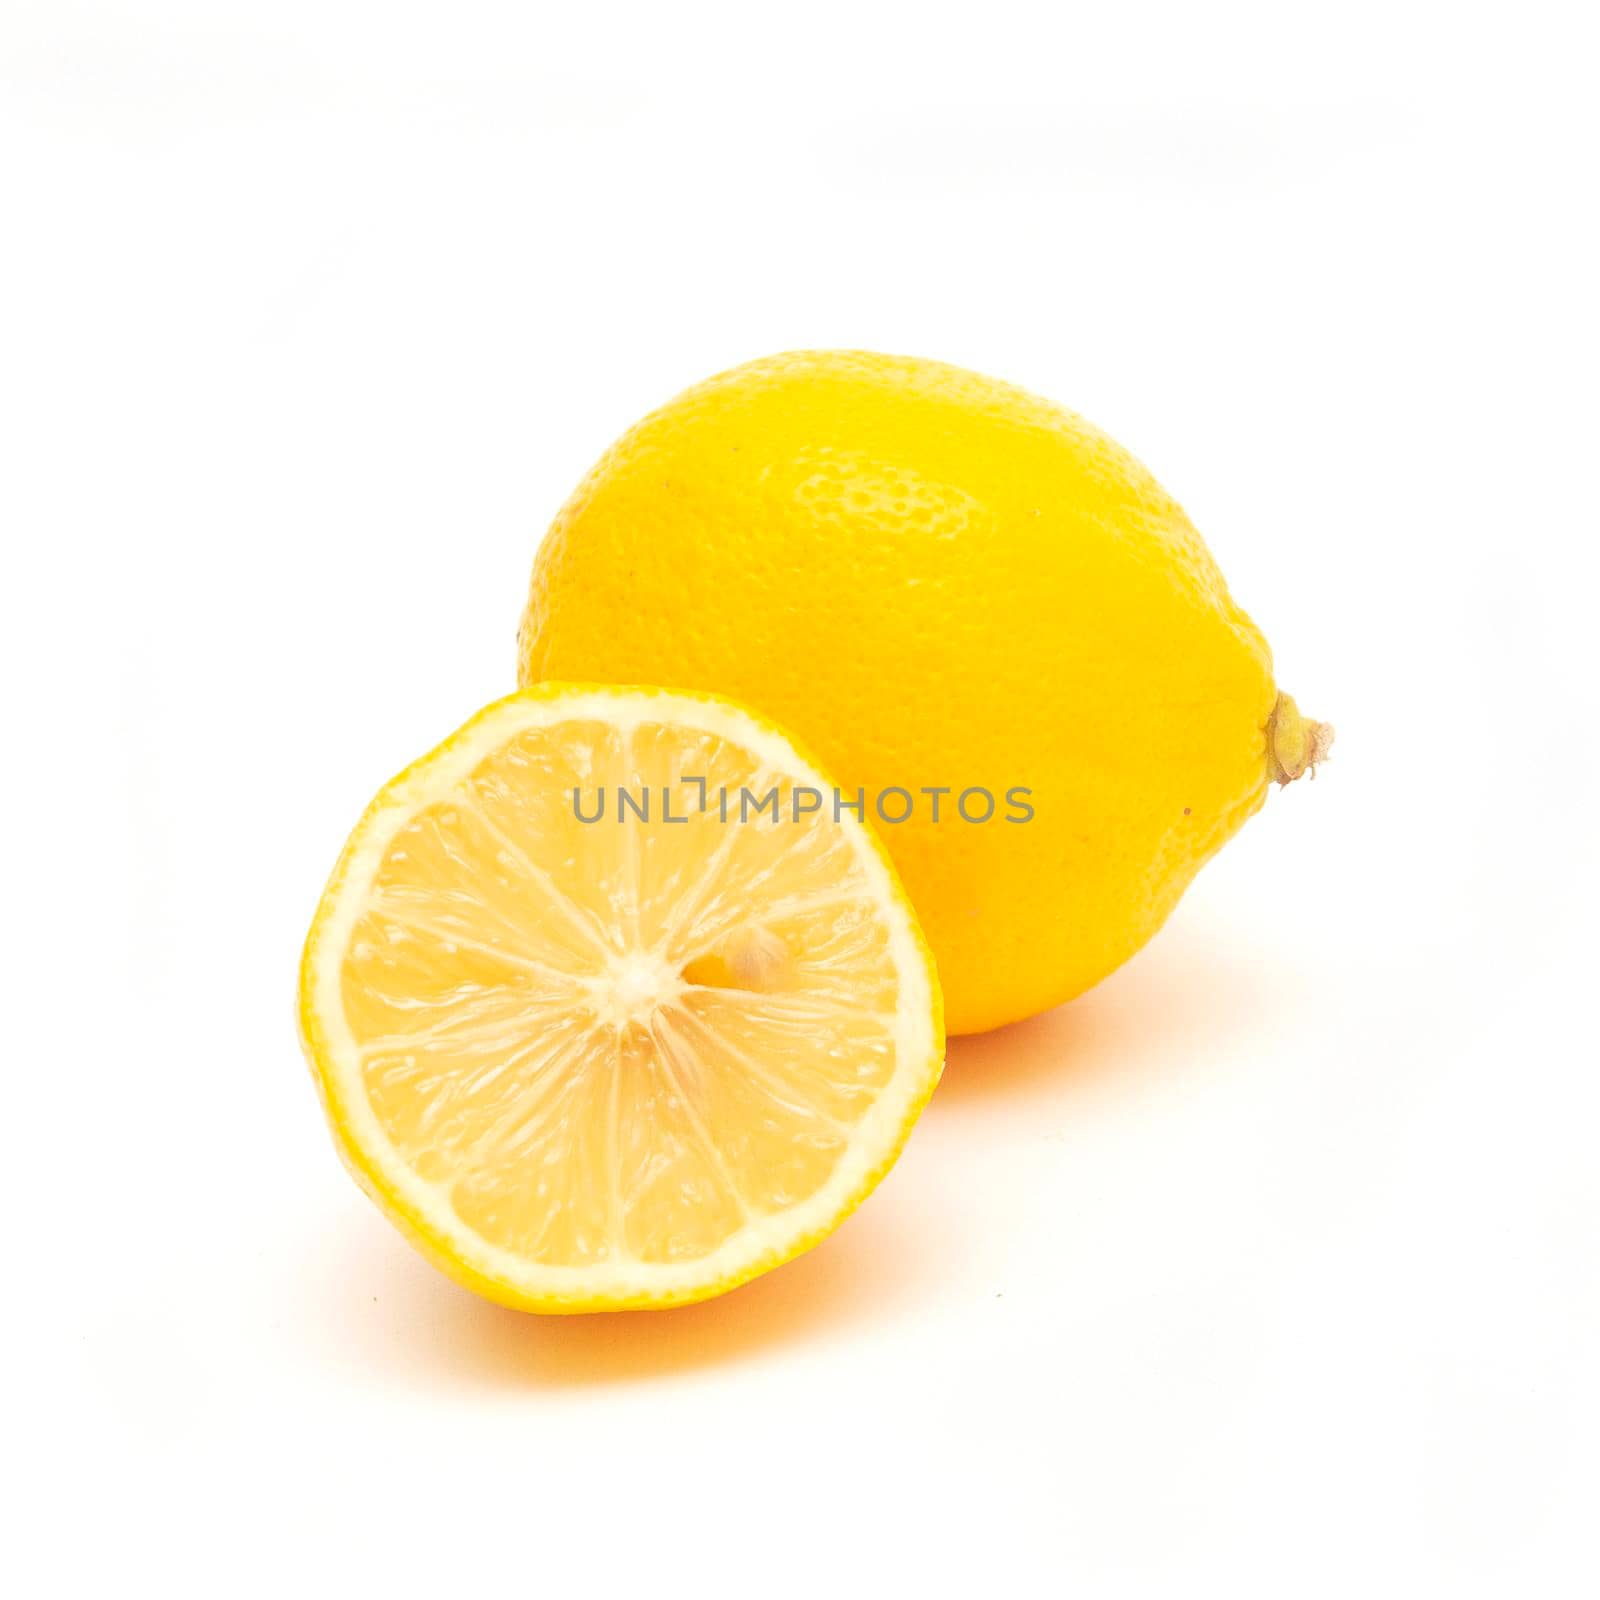 fresh lemon fruit and a half of lemon isolated on white